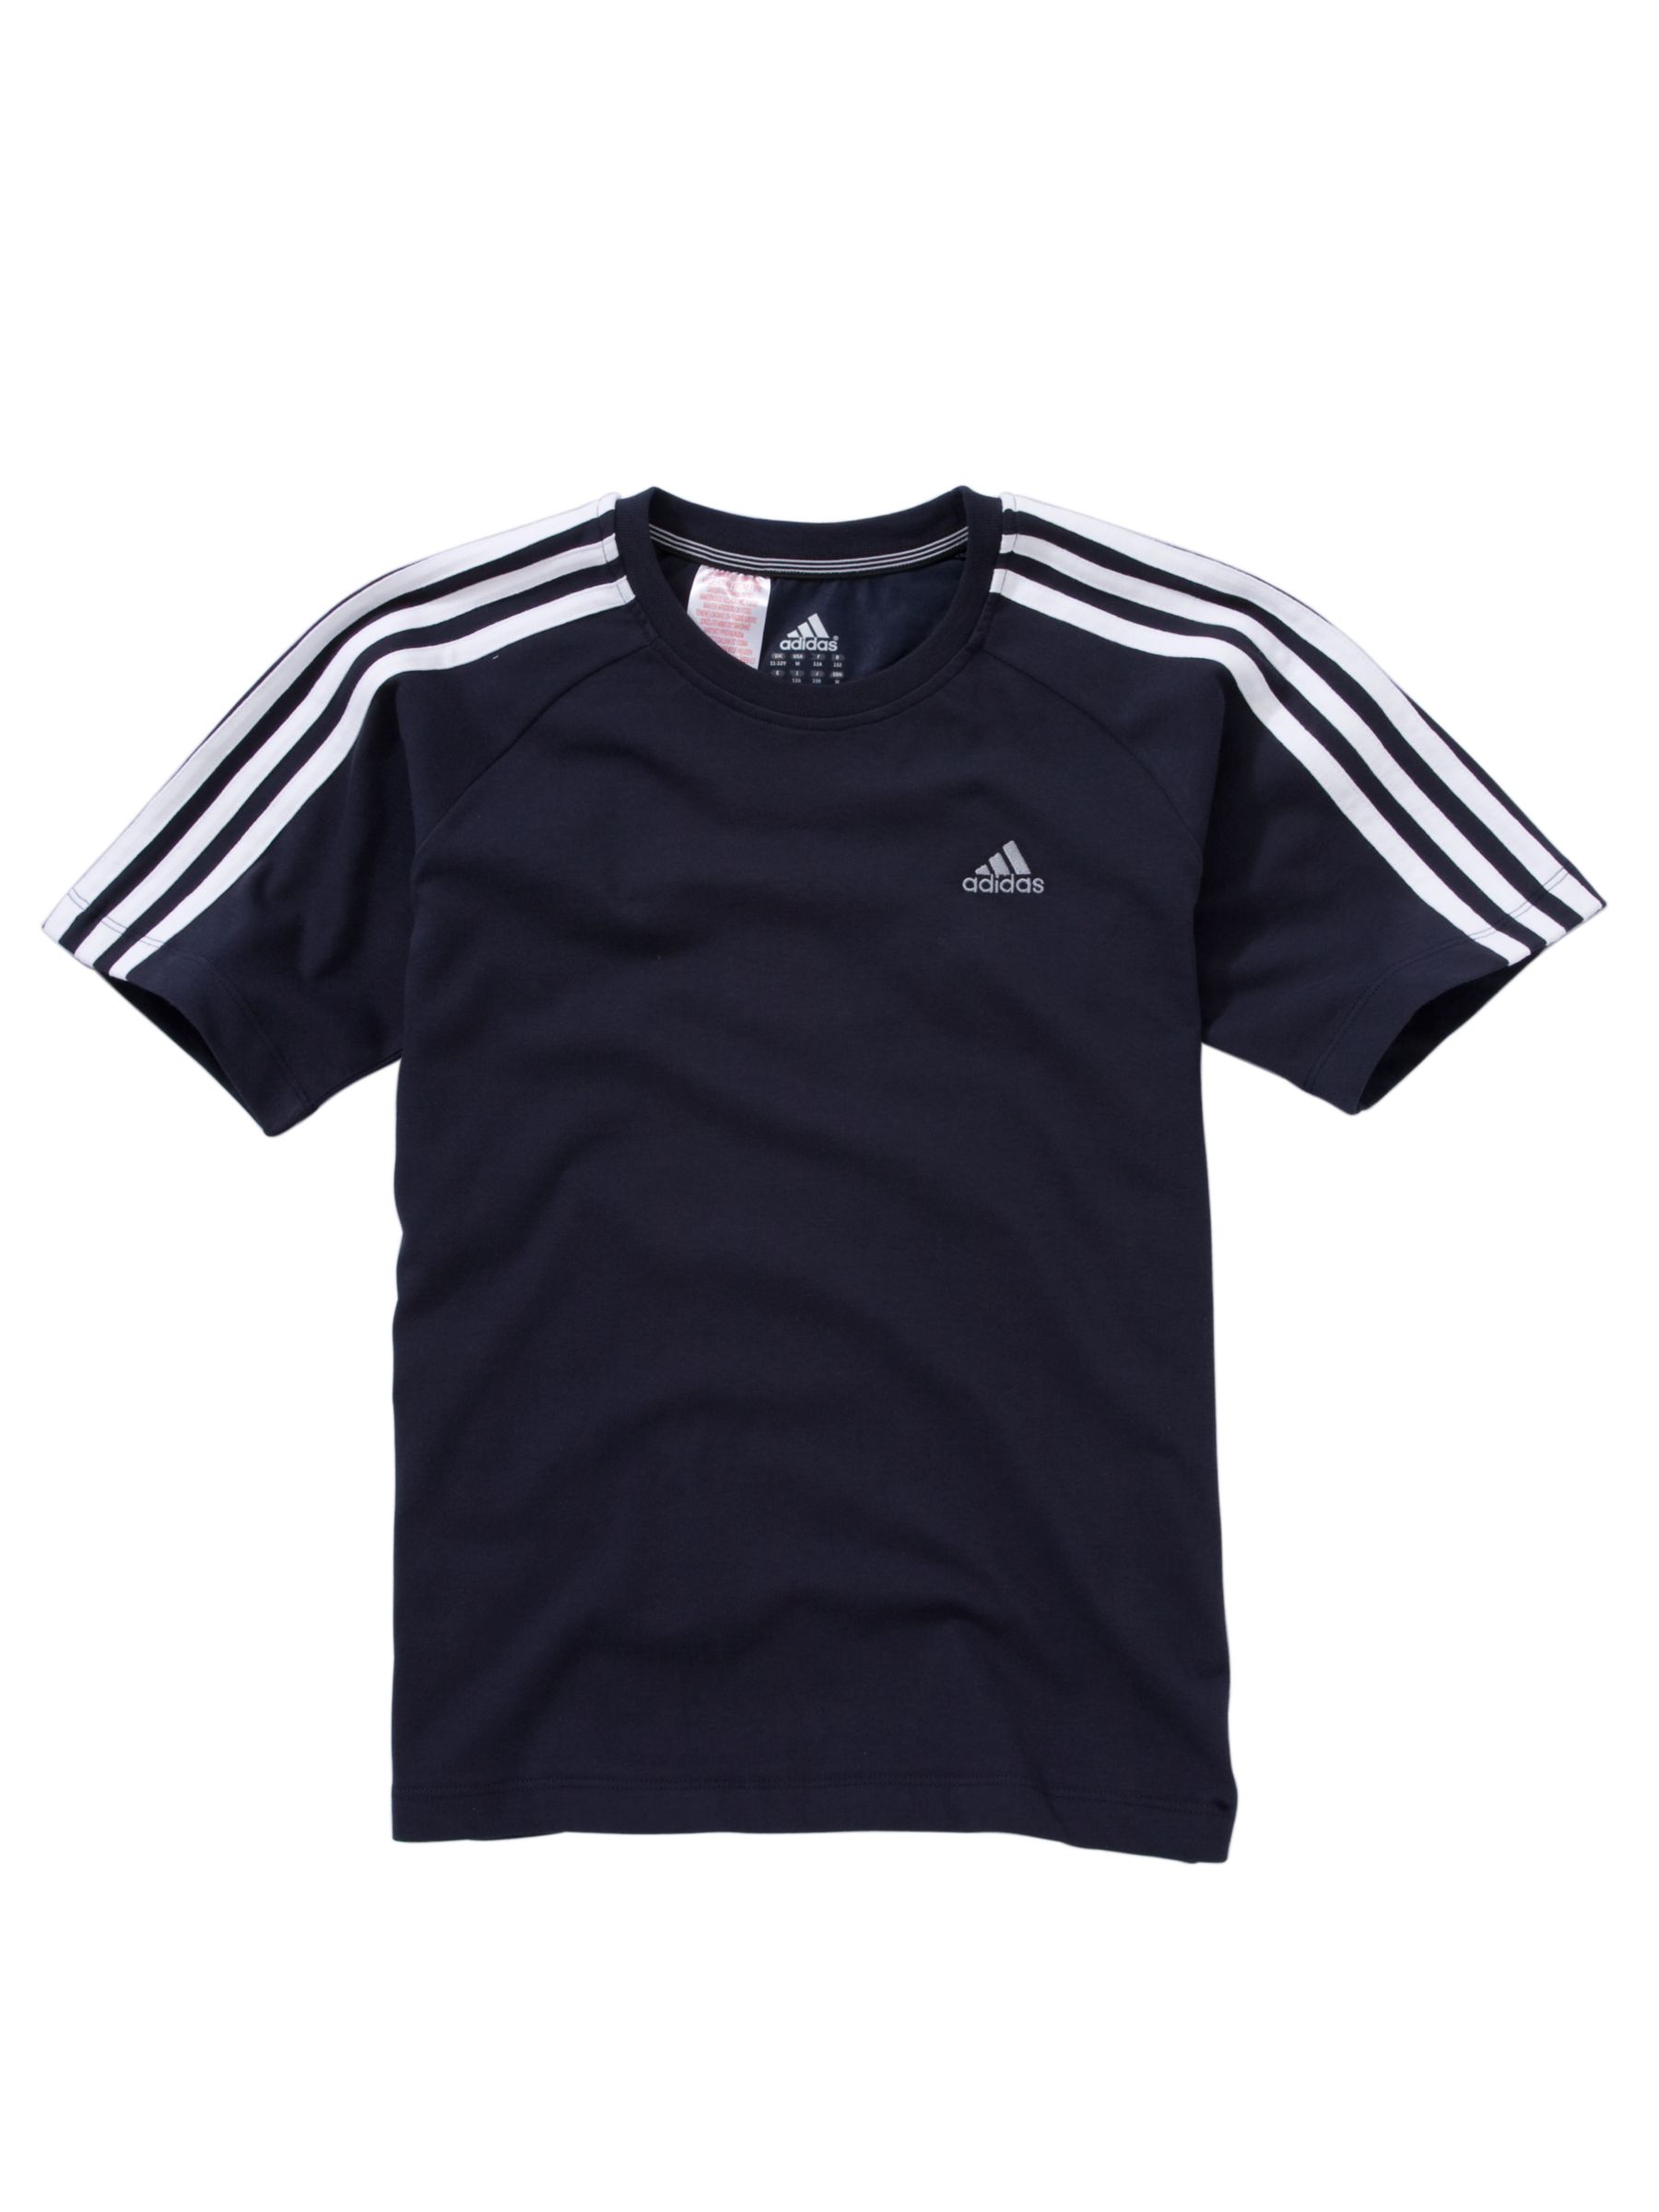 Adidas Short Sleeve T-Shirt, Navy/White